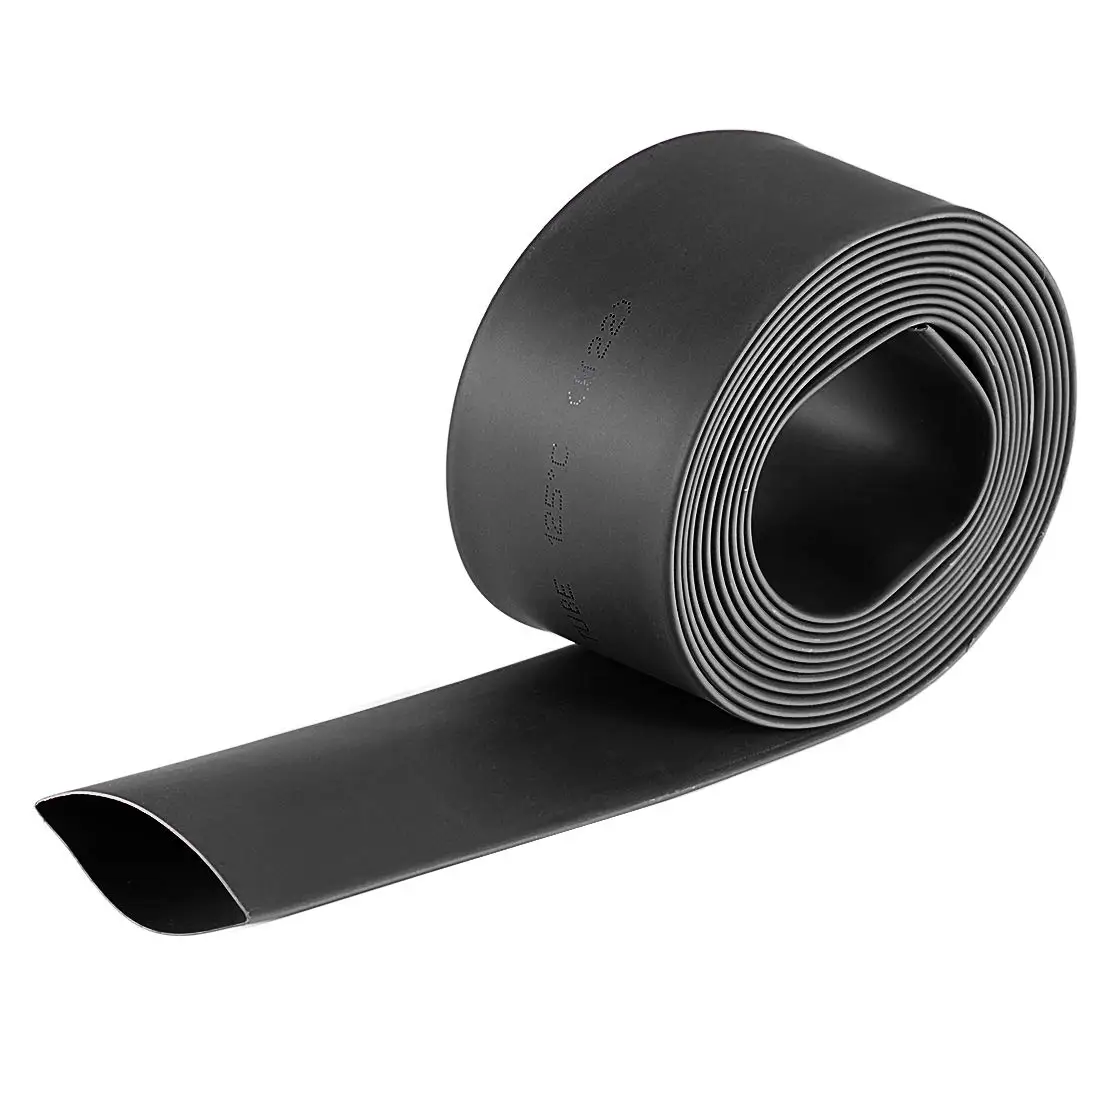 

Keszoox Heat Shrink Tubing, 22mm Dia 37mm Flat Width 2:1 Ratio Shrinkable Tube Cable Sleeve 2m - Black